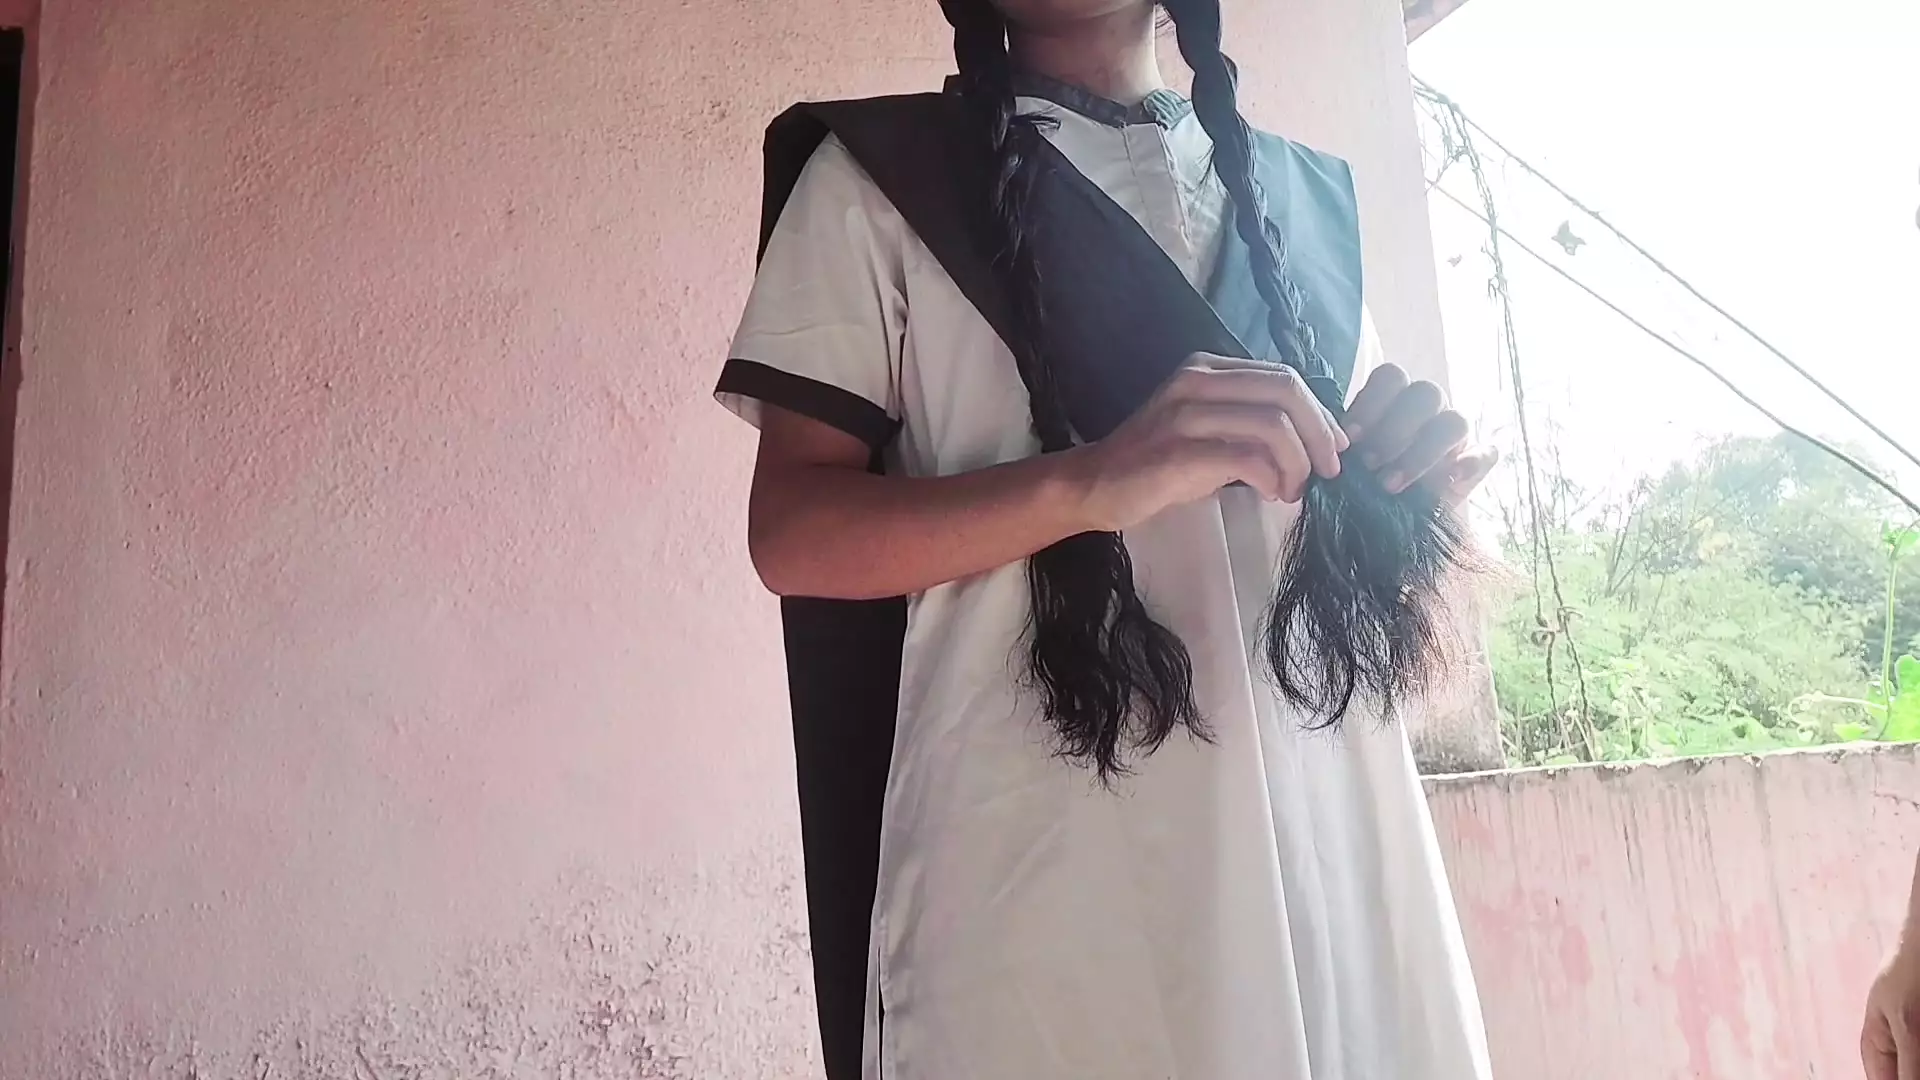 Collage Dex Video - Indian college girl sex video watch online